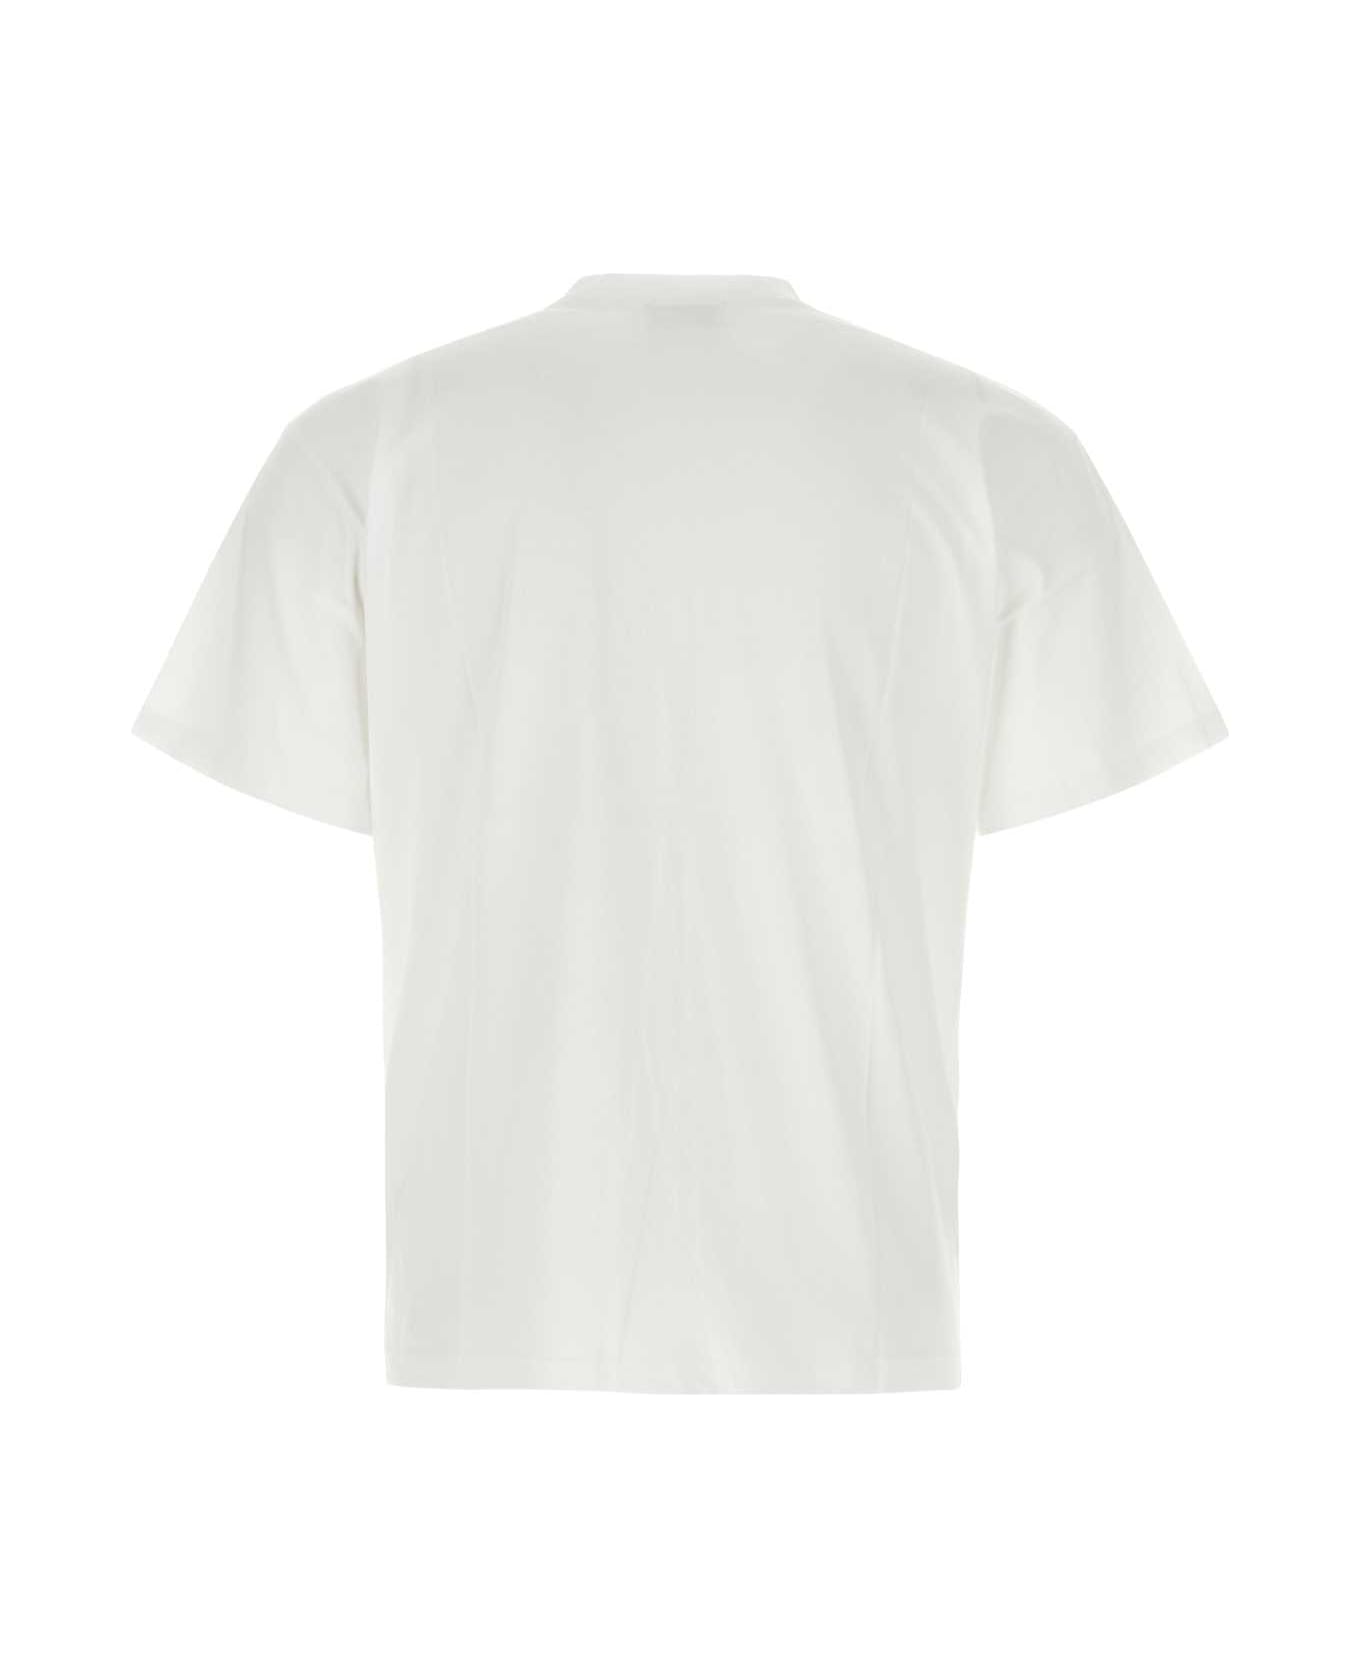 Aries White Cotton Temple T-shirt - WHITE Tシャツ